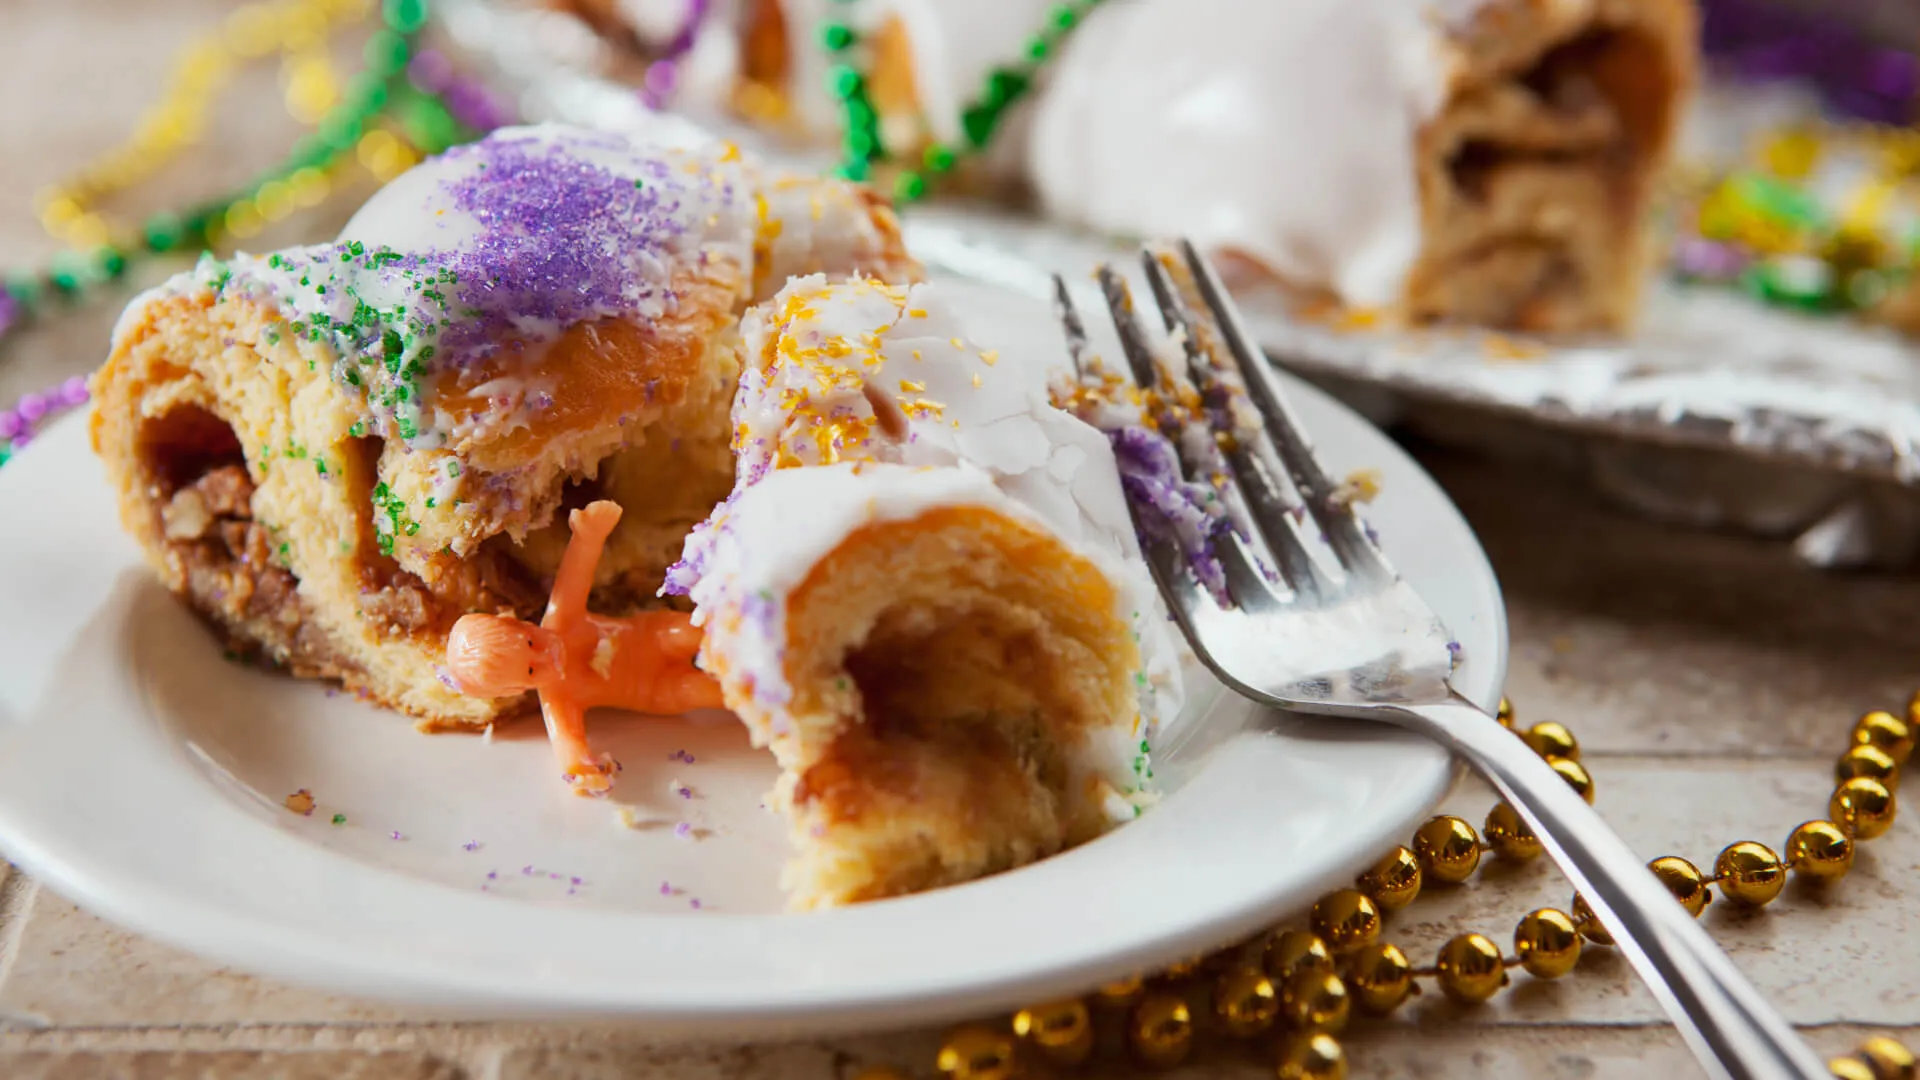 Mardi Gras Baby Jesus Toy From Inside Piece Of King Cake